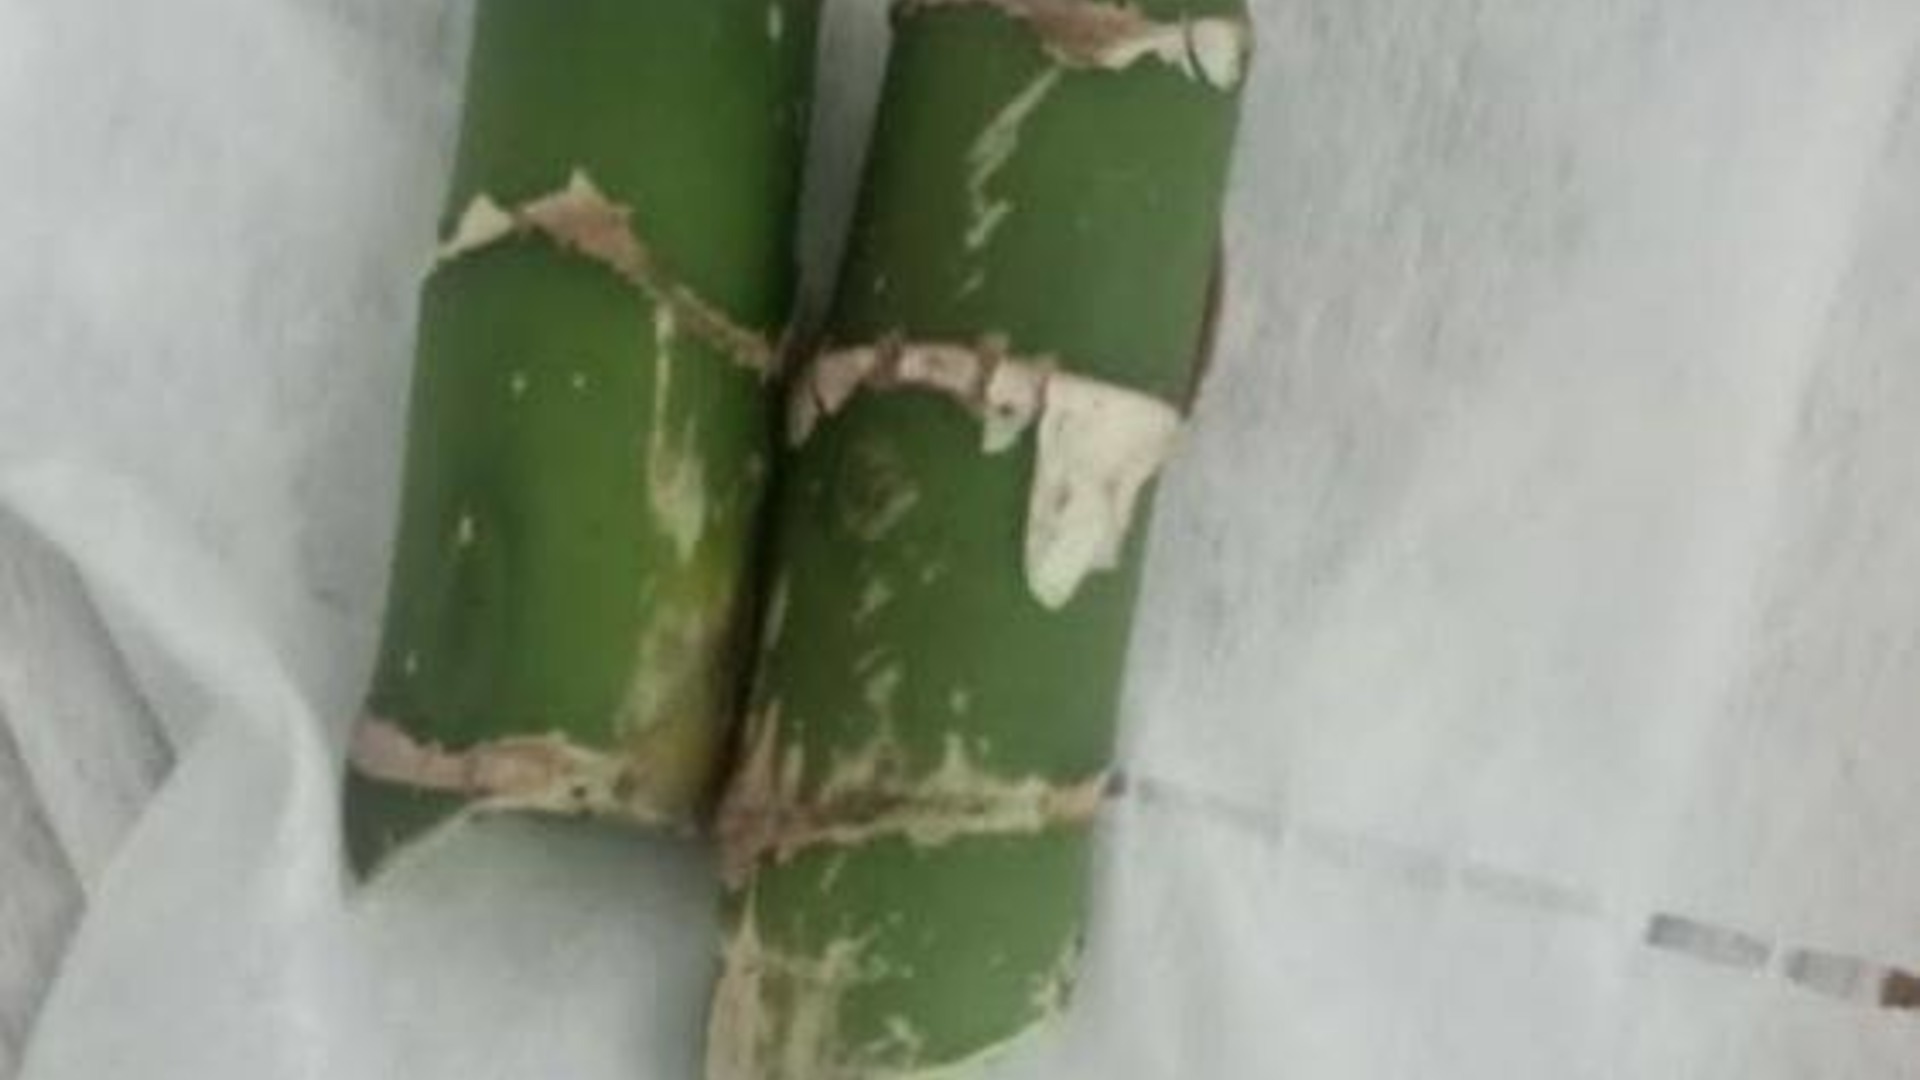 В Красноярском крае дети приняли за бамбук обрезки ядовитого растения и съели их